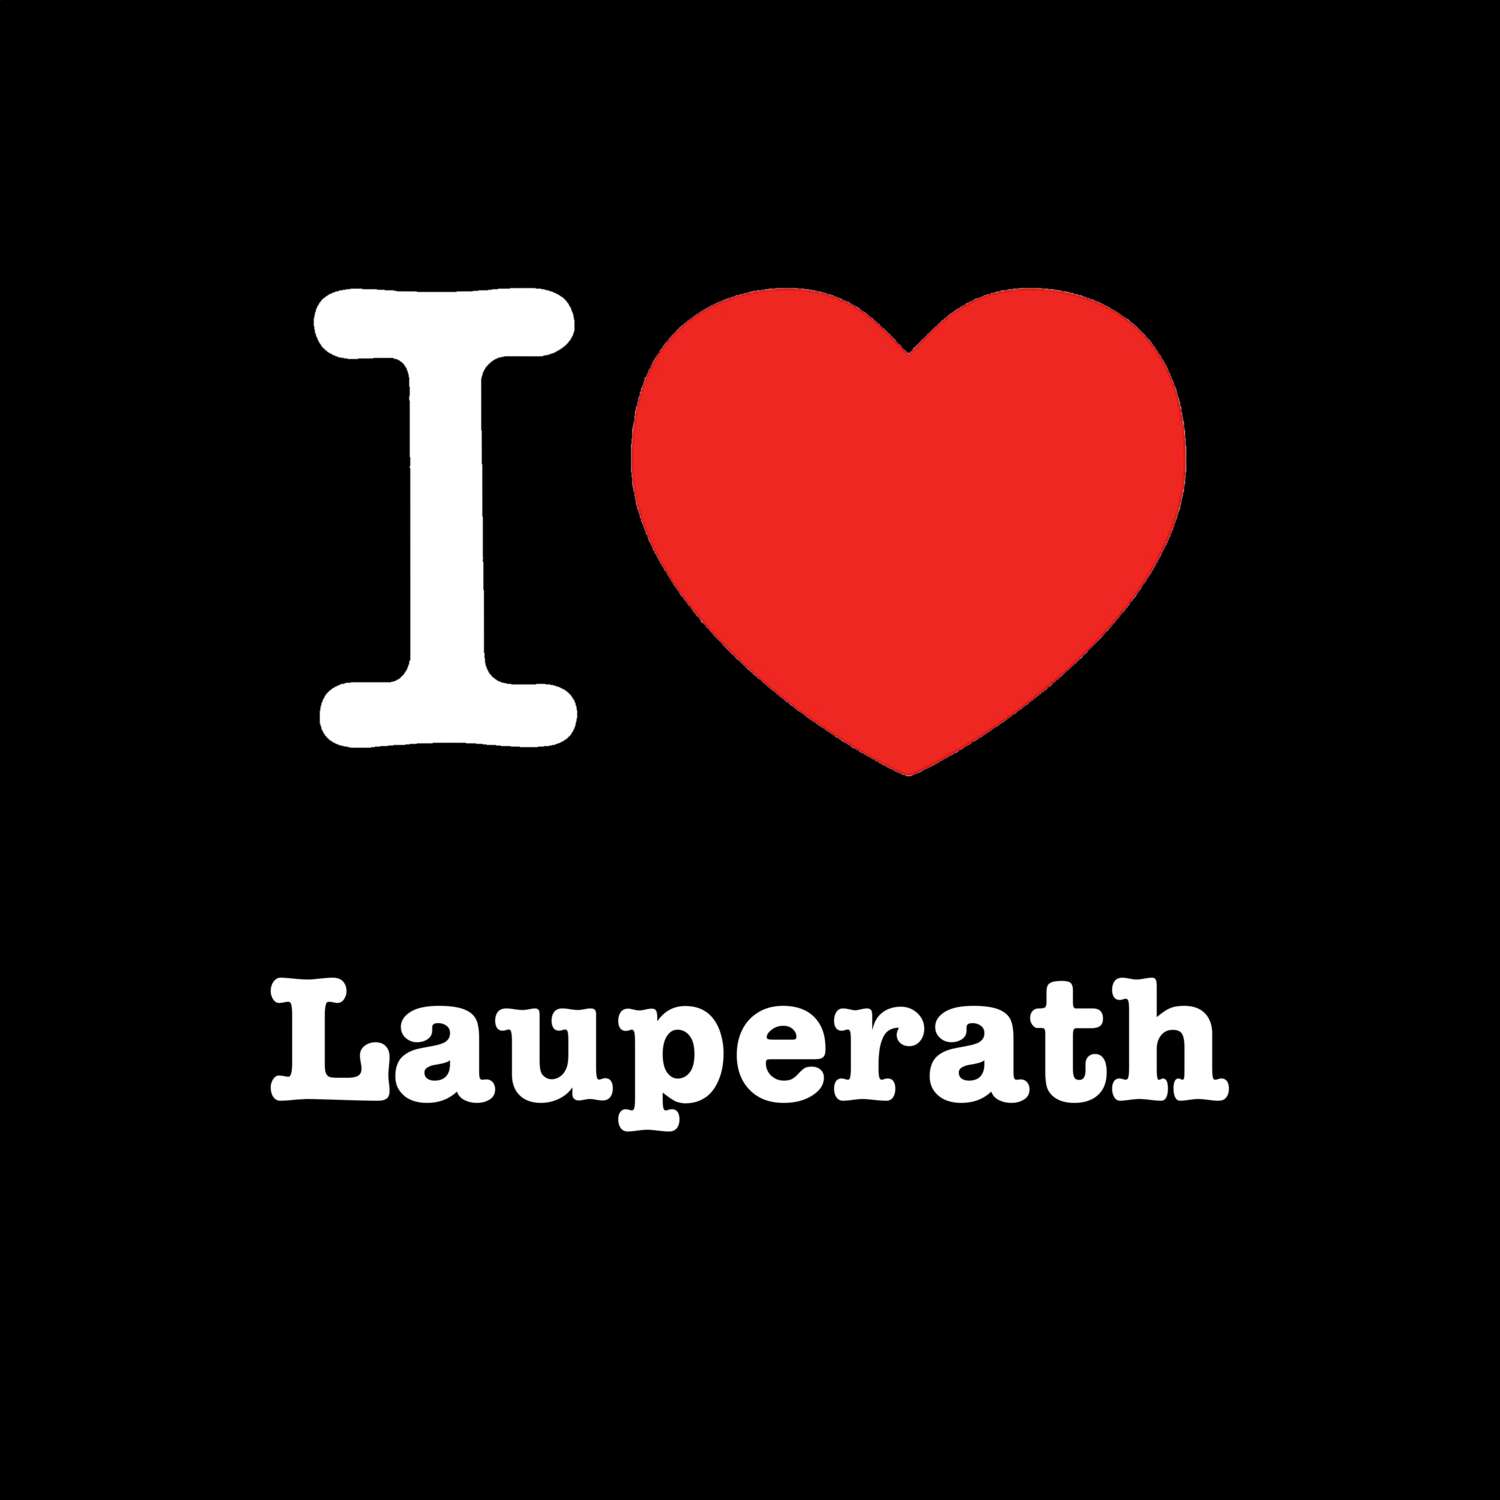 Lauperath T-Shirt »I love«